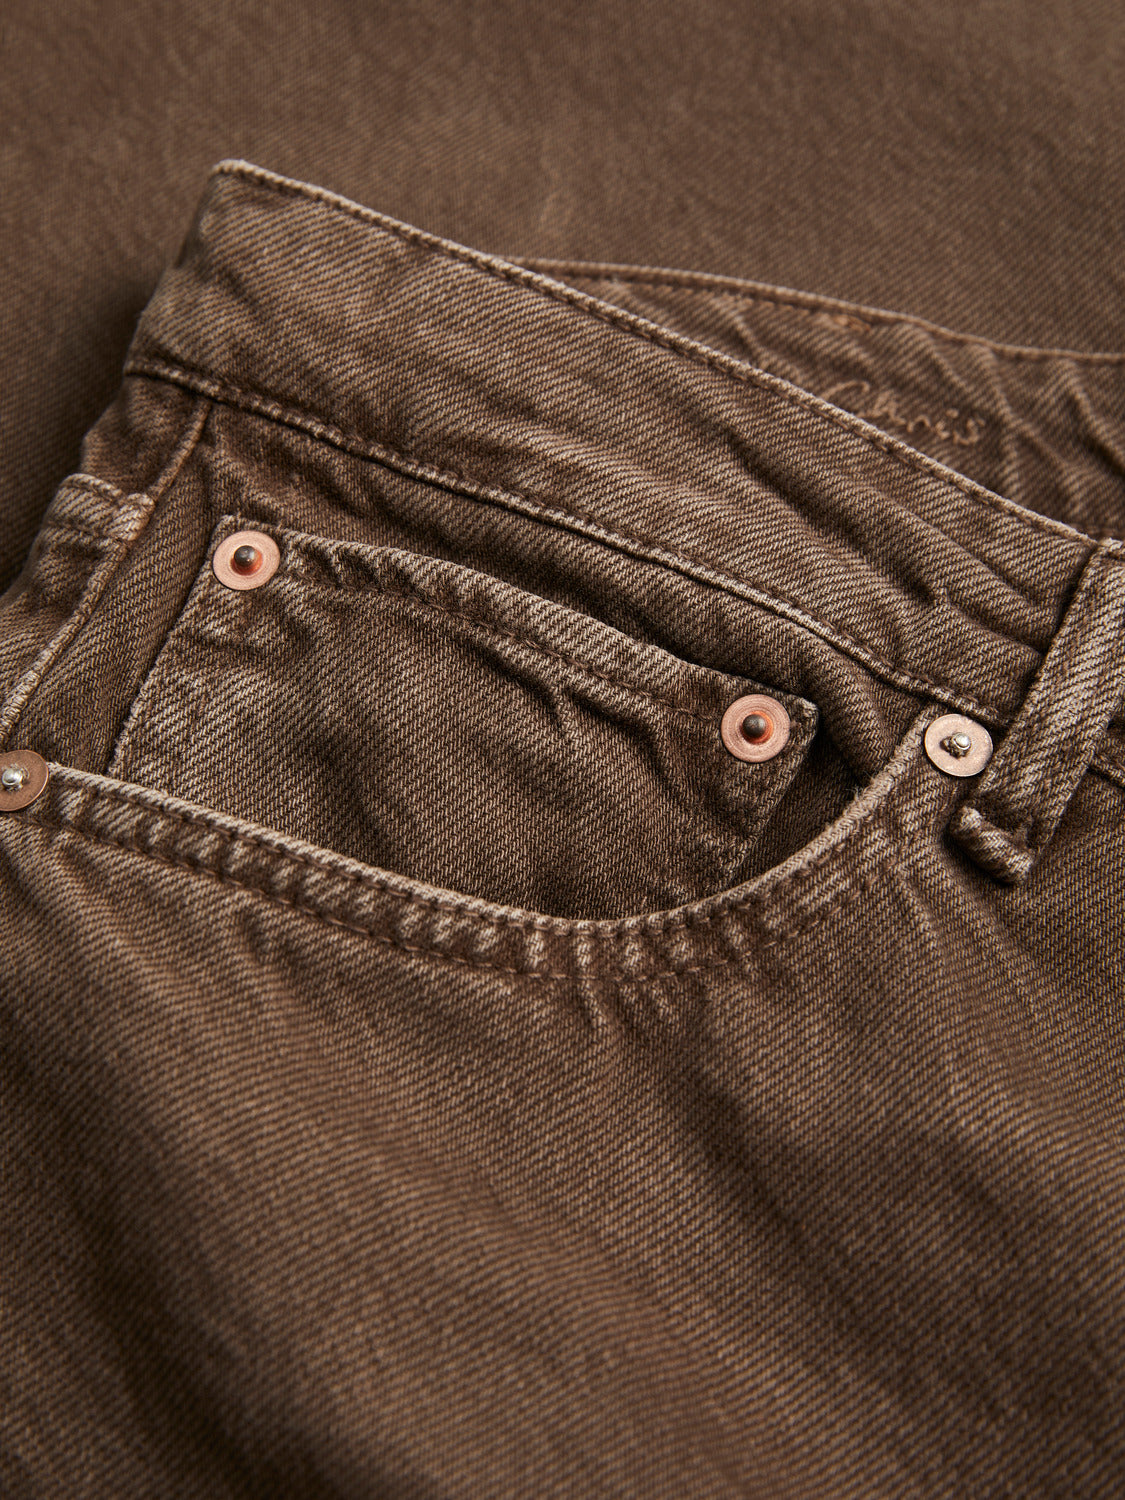 JJICHRIS Jeans - Chocolate Brown